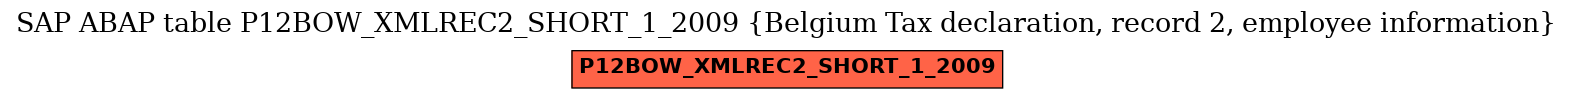 E-R Diagram for table P12BOW_XMLREC2_SHORT_1_2009 (Belgium Tax declaration, record 2, employee information)